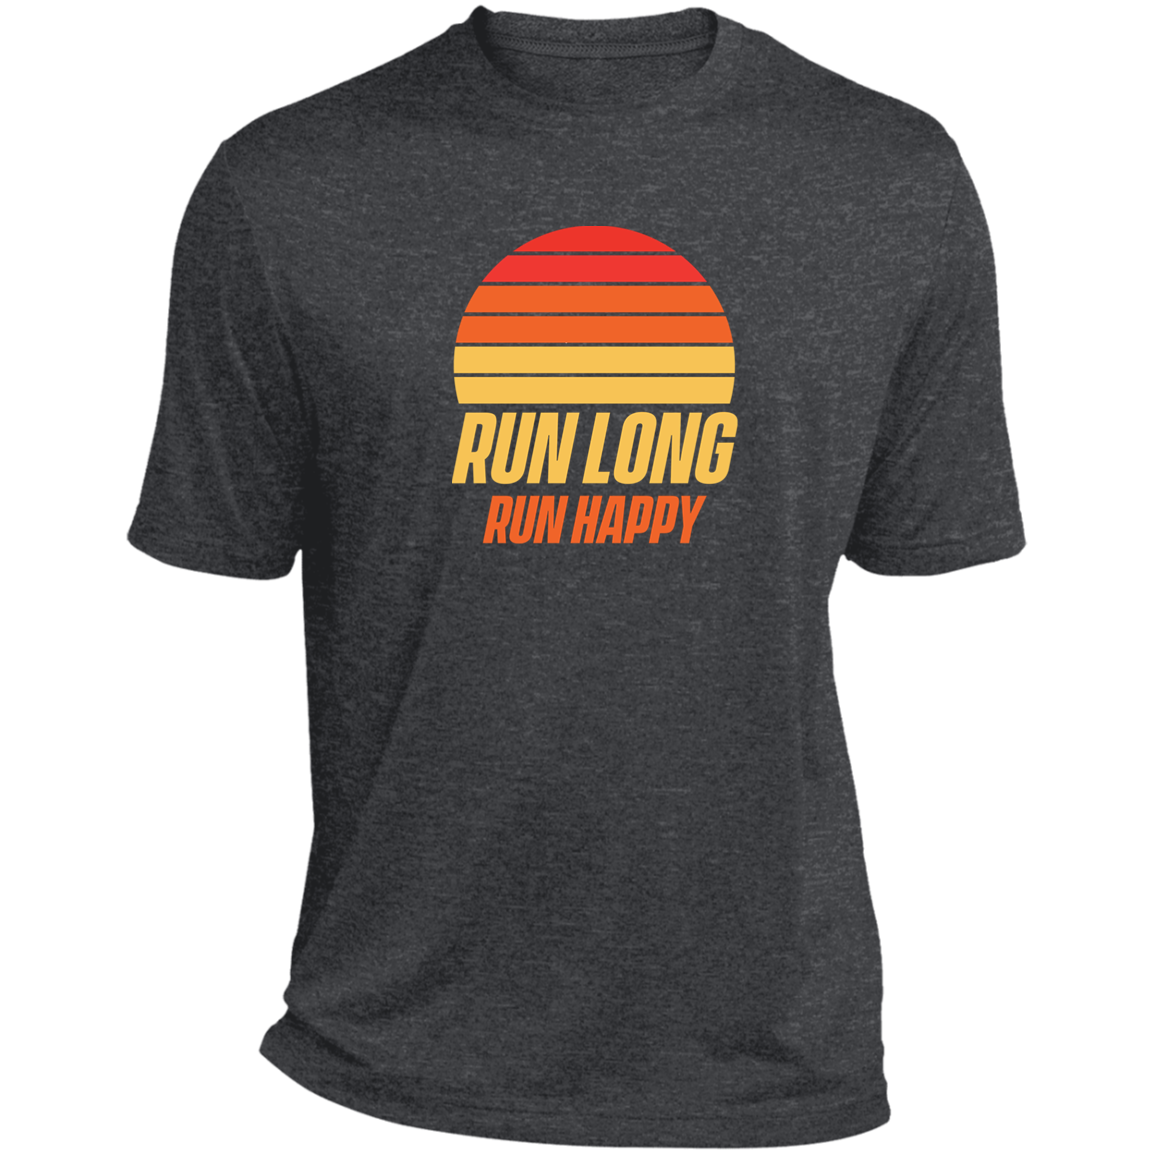 Run Long Run Happy (shirt of the month)